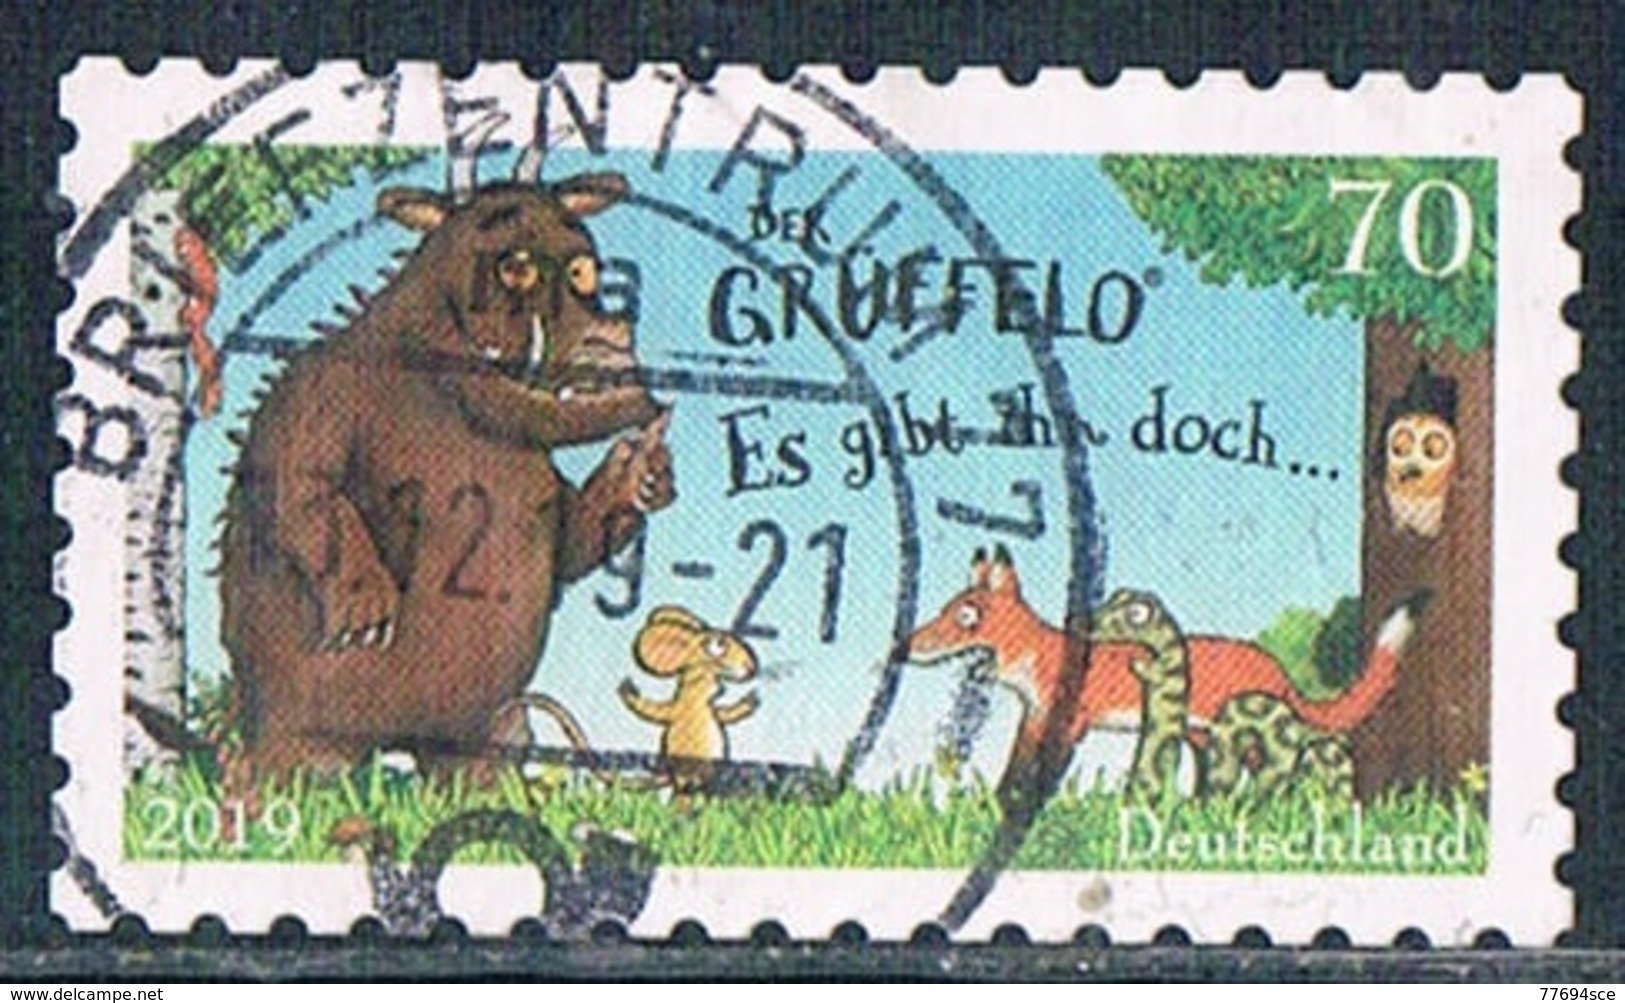 2019  Der Grüffelo  (selbstklebend) - Used Stamps